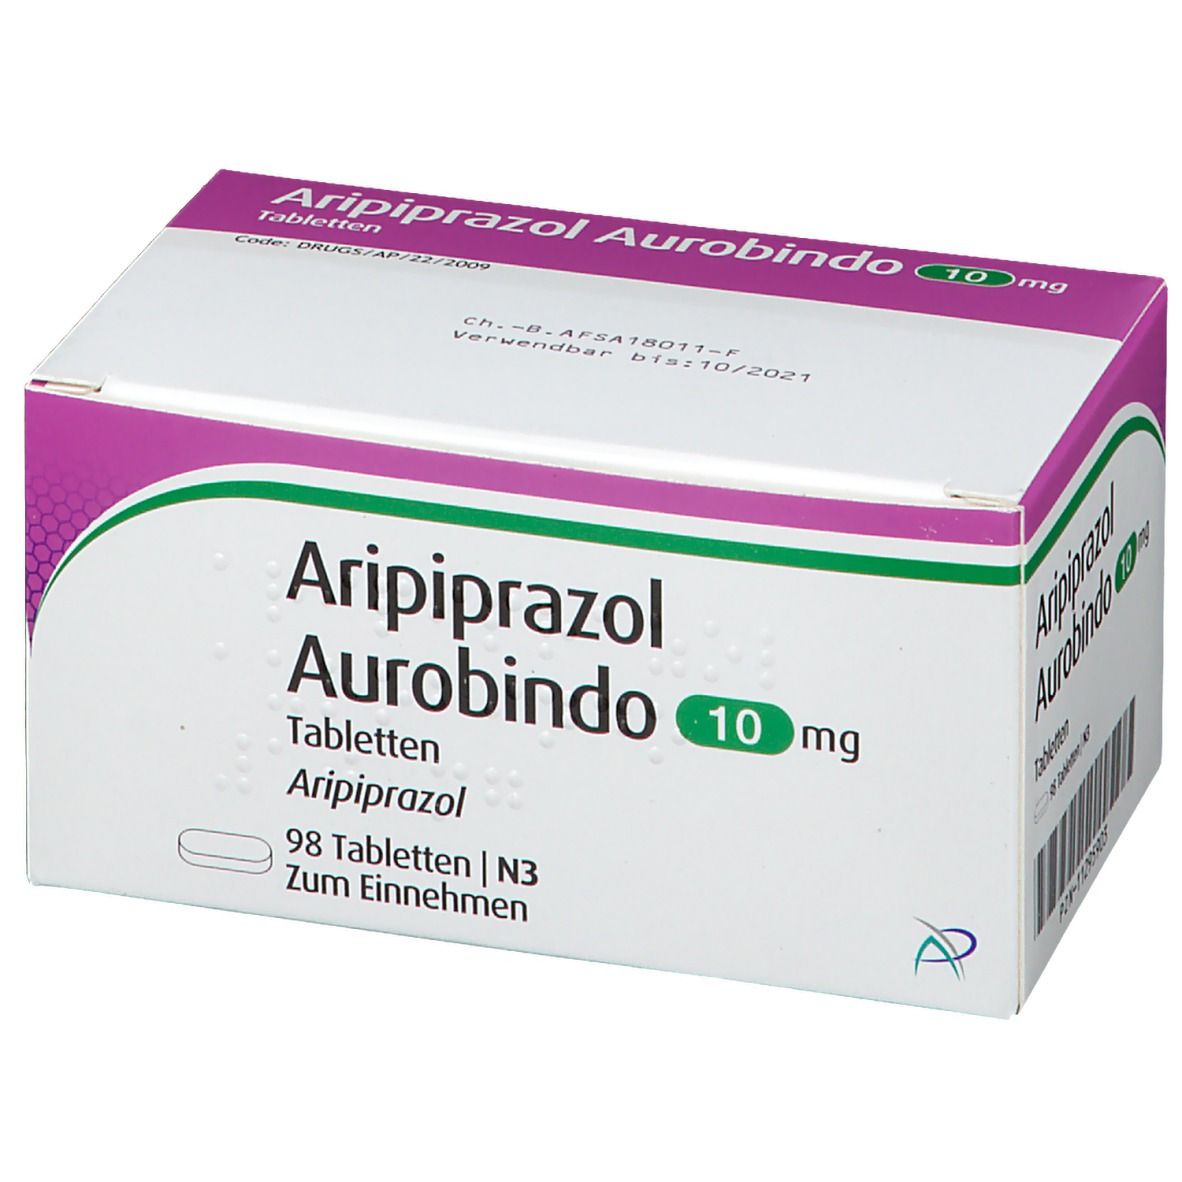 Aripiprazol Aurobindo 10 mg